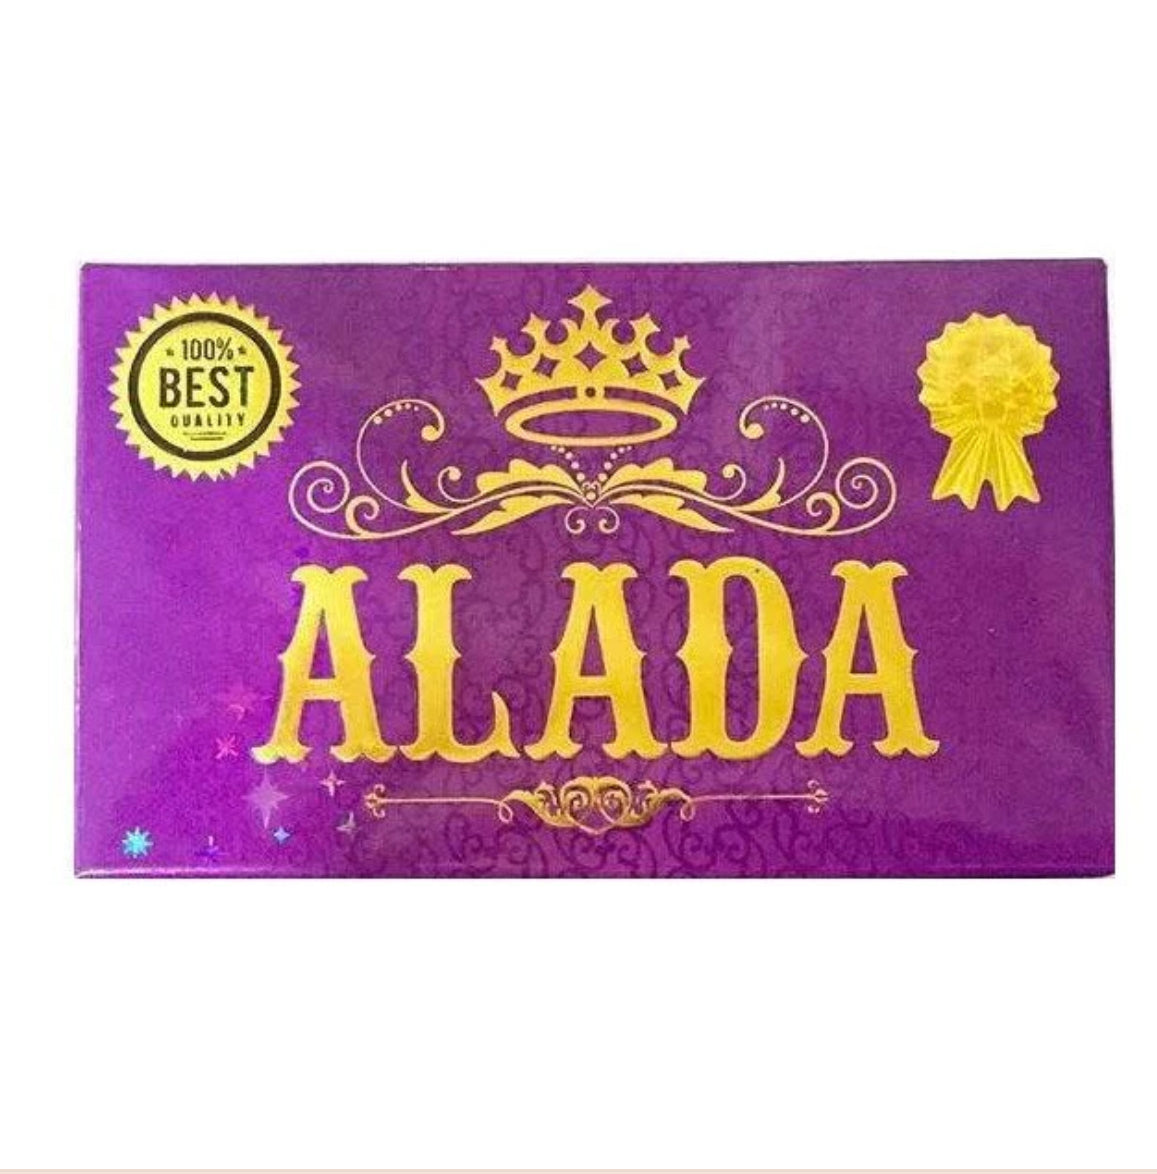 ALADA WHITENING SOAP 160g - True Beauty Skin Essentials